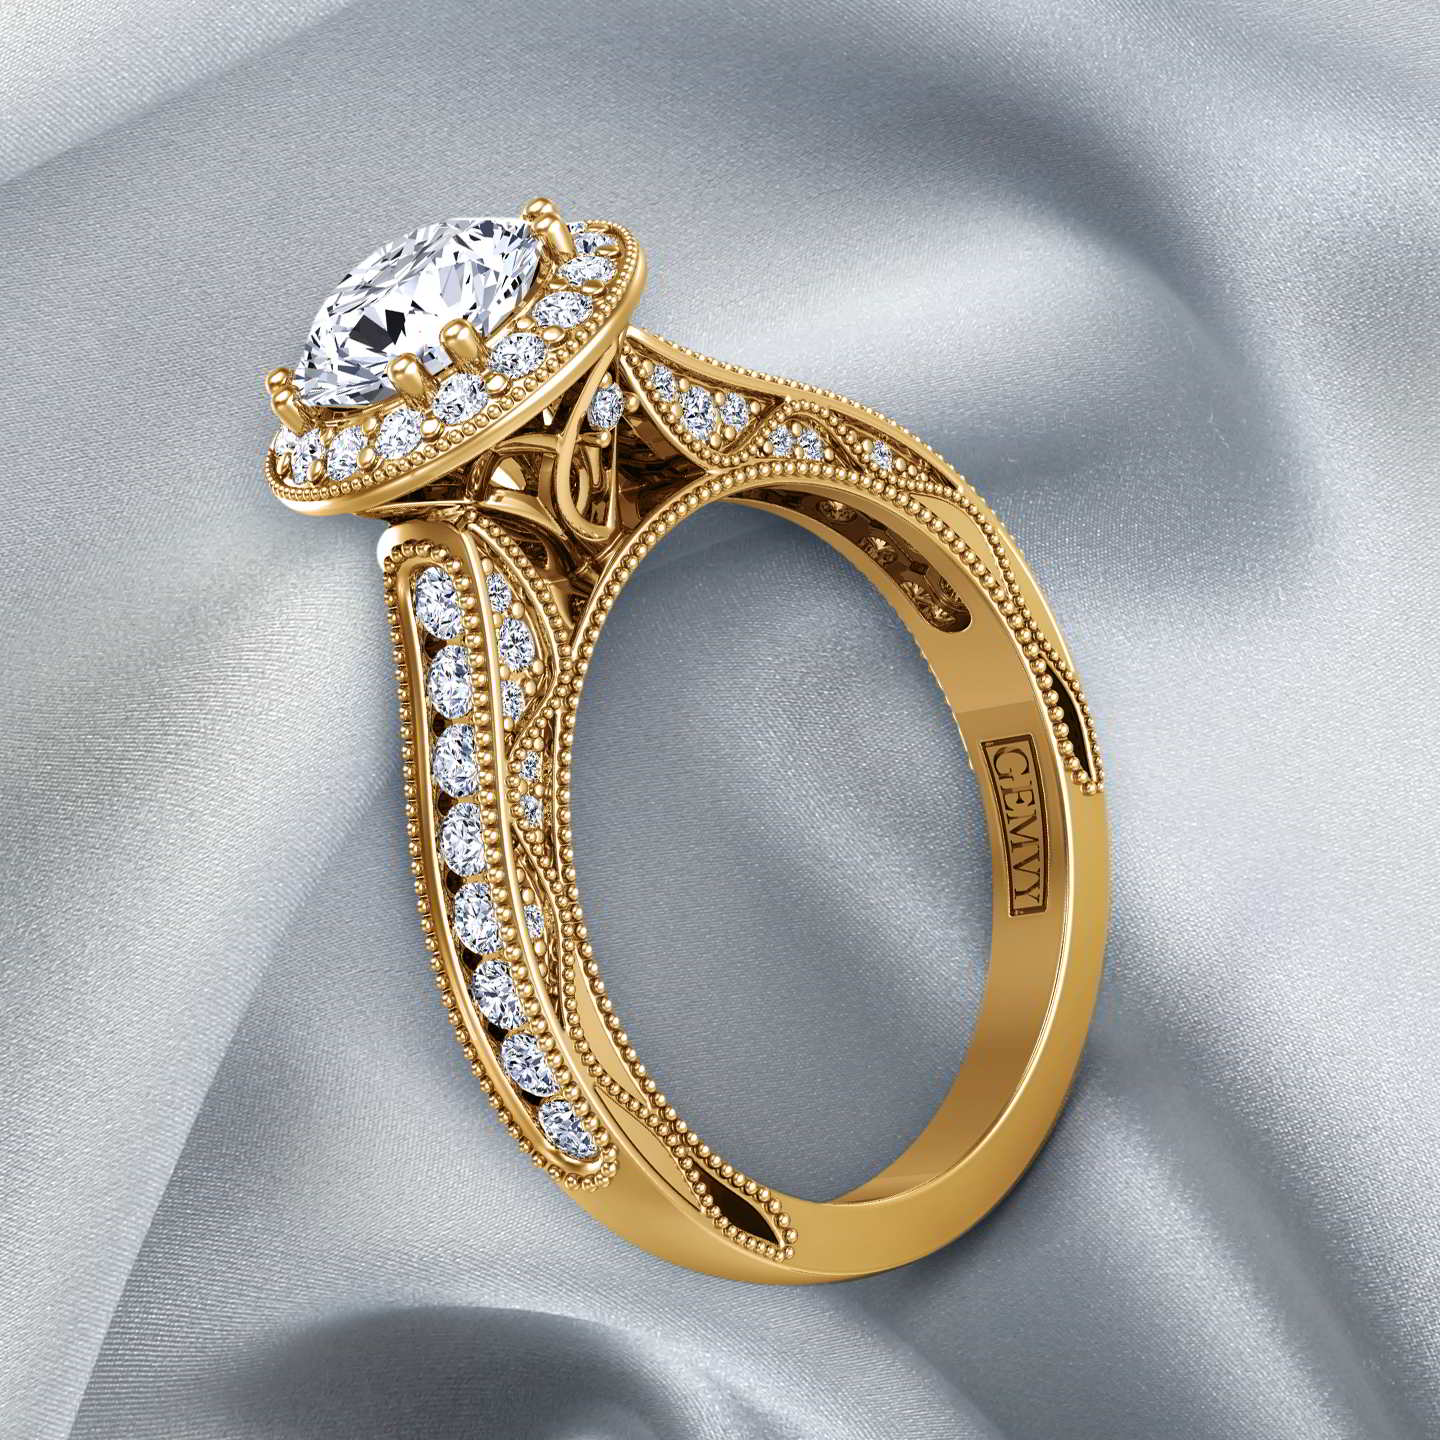 LUXURY BOLD VINTAGE INSPIRED CHANNEL SET DIAMOND RING WIST-1529-HL